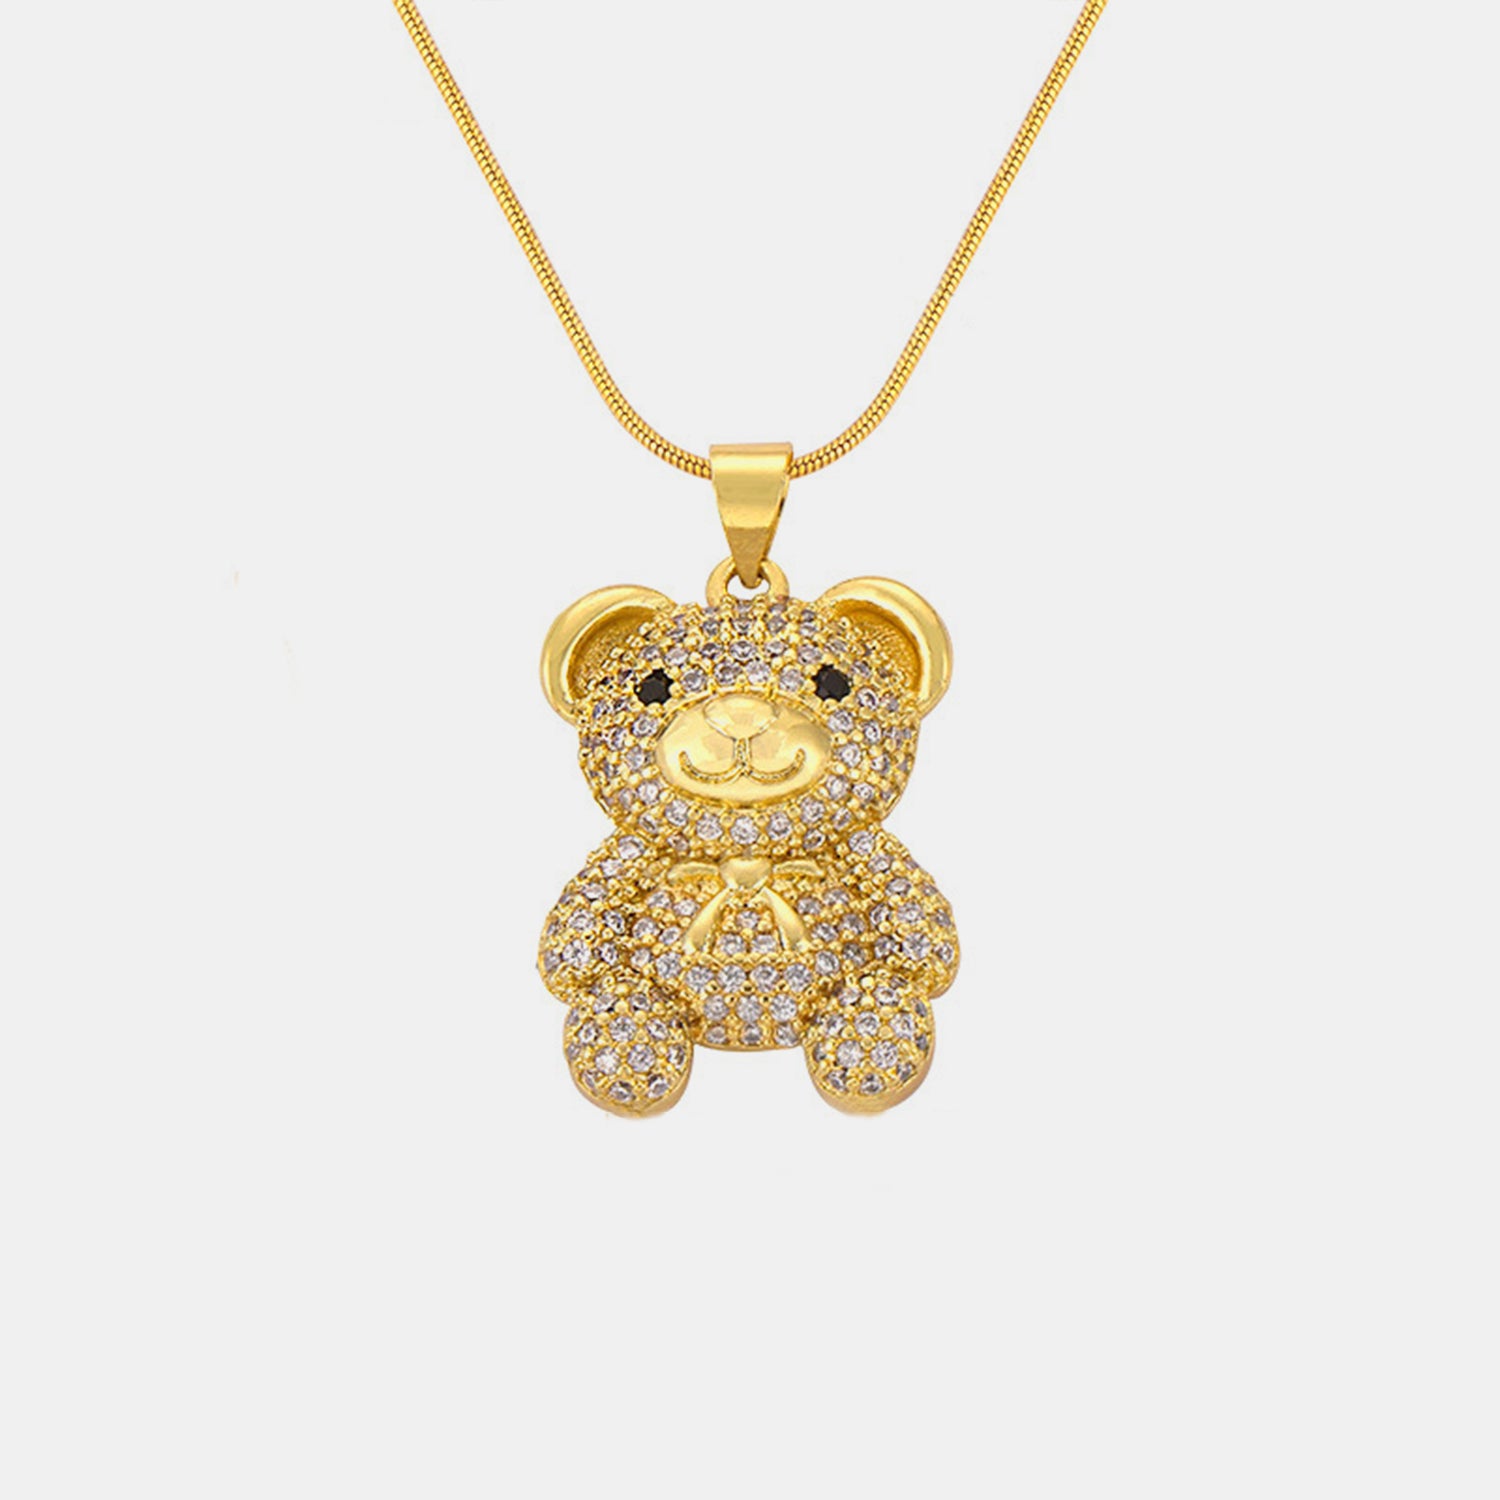 TEEK - Titanium Steel Gold-Plated Bear Pendant Necklace JEWELRY TEEK Trend Style B  